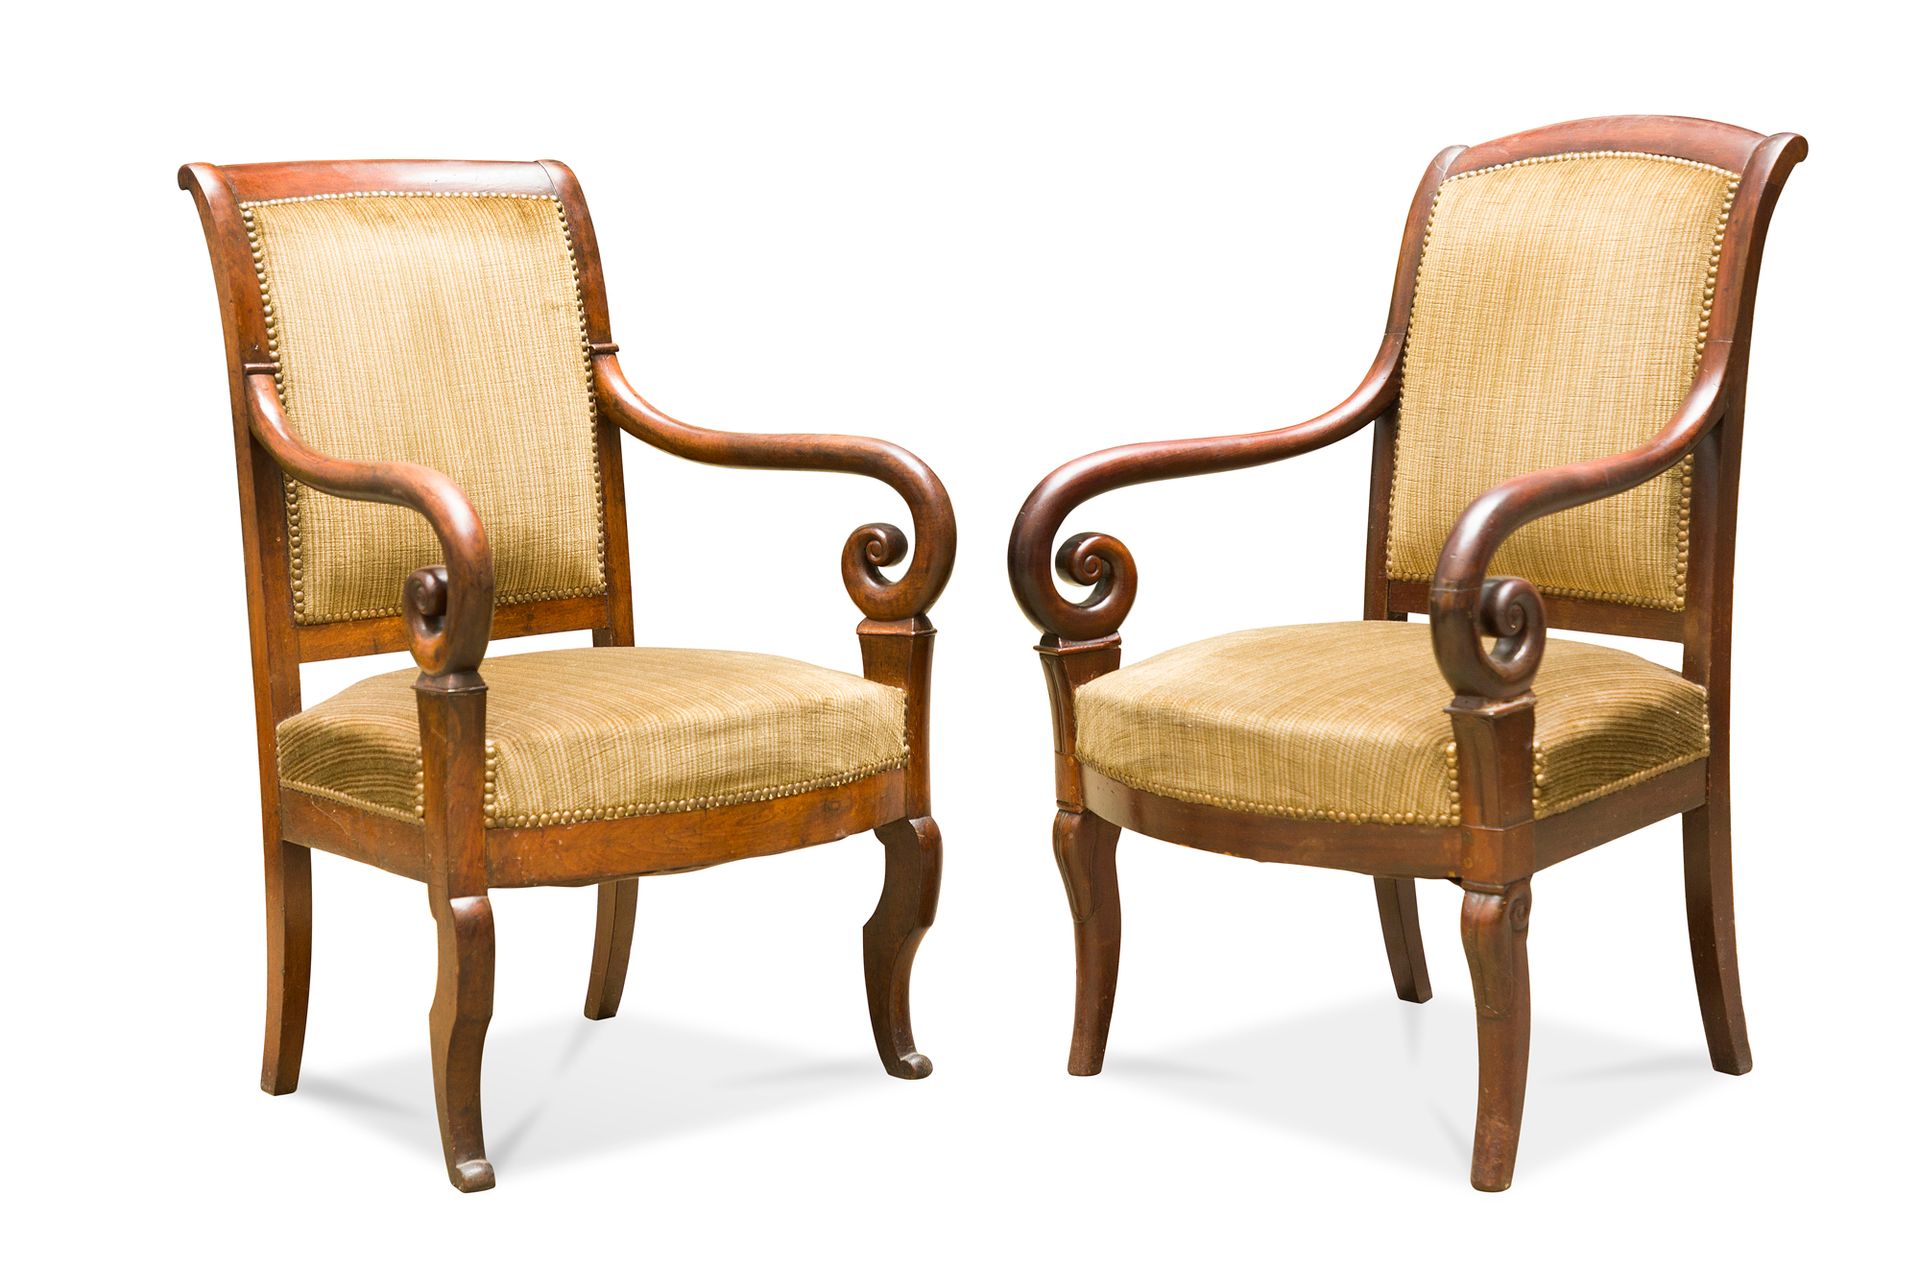 Null 一对桃花心木和桃花心木饰面的扶手椅。涡旋式扶手

路易-菲利普时期

二手绿色天鹅绒装饰品

H.91厘米